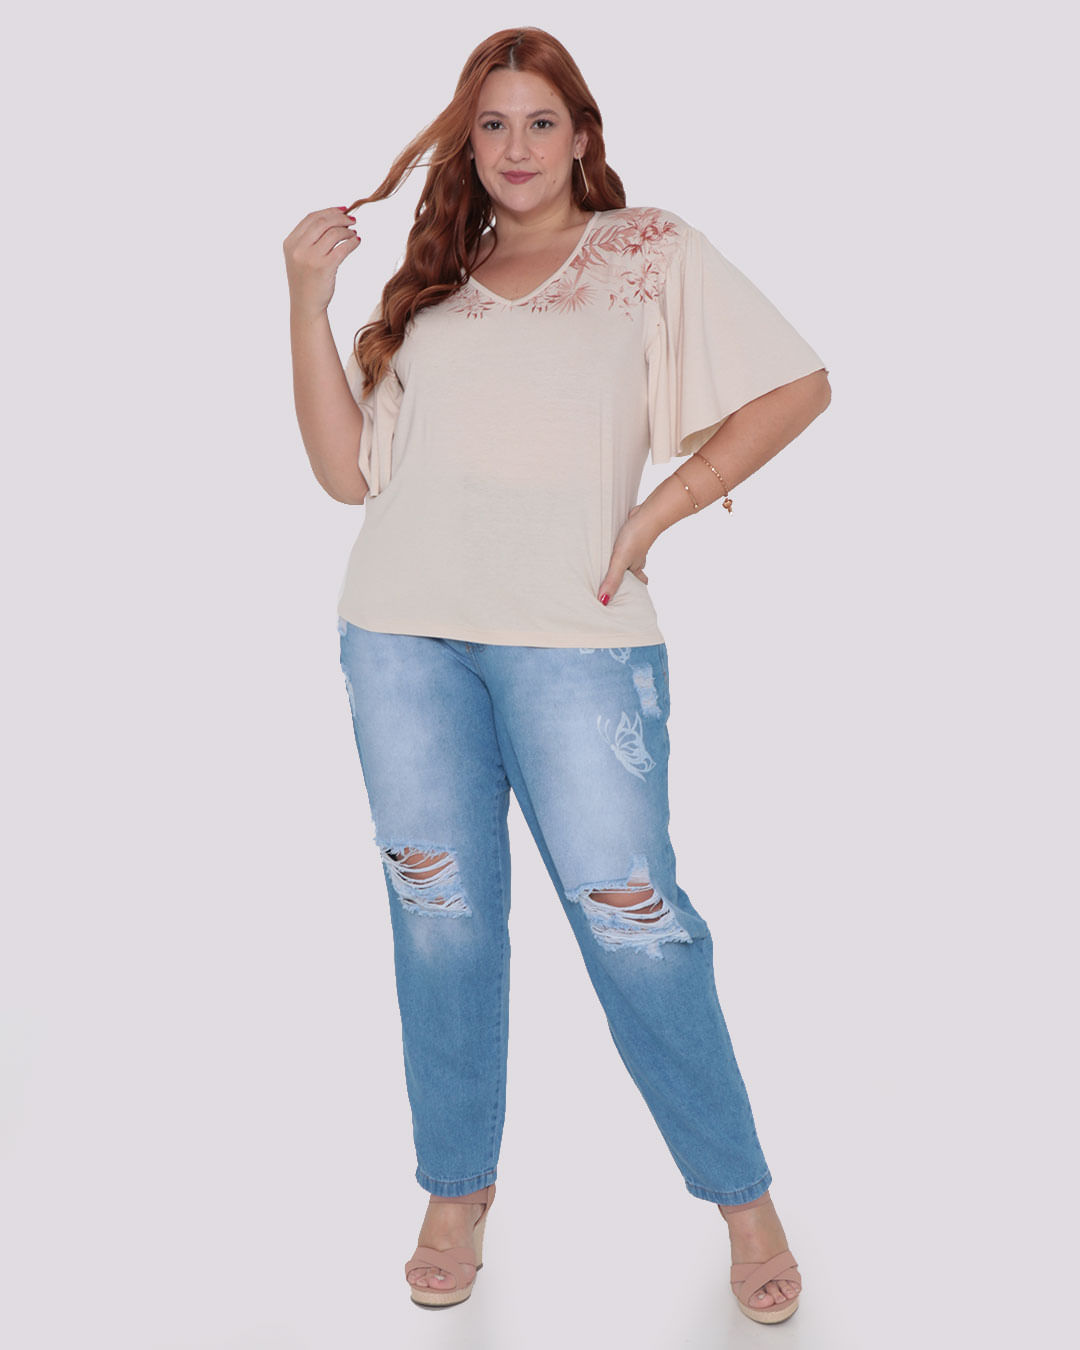 Calça jeans capri - Tinder jeans - Calça Jeans Feminina - Magazine